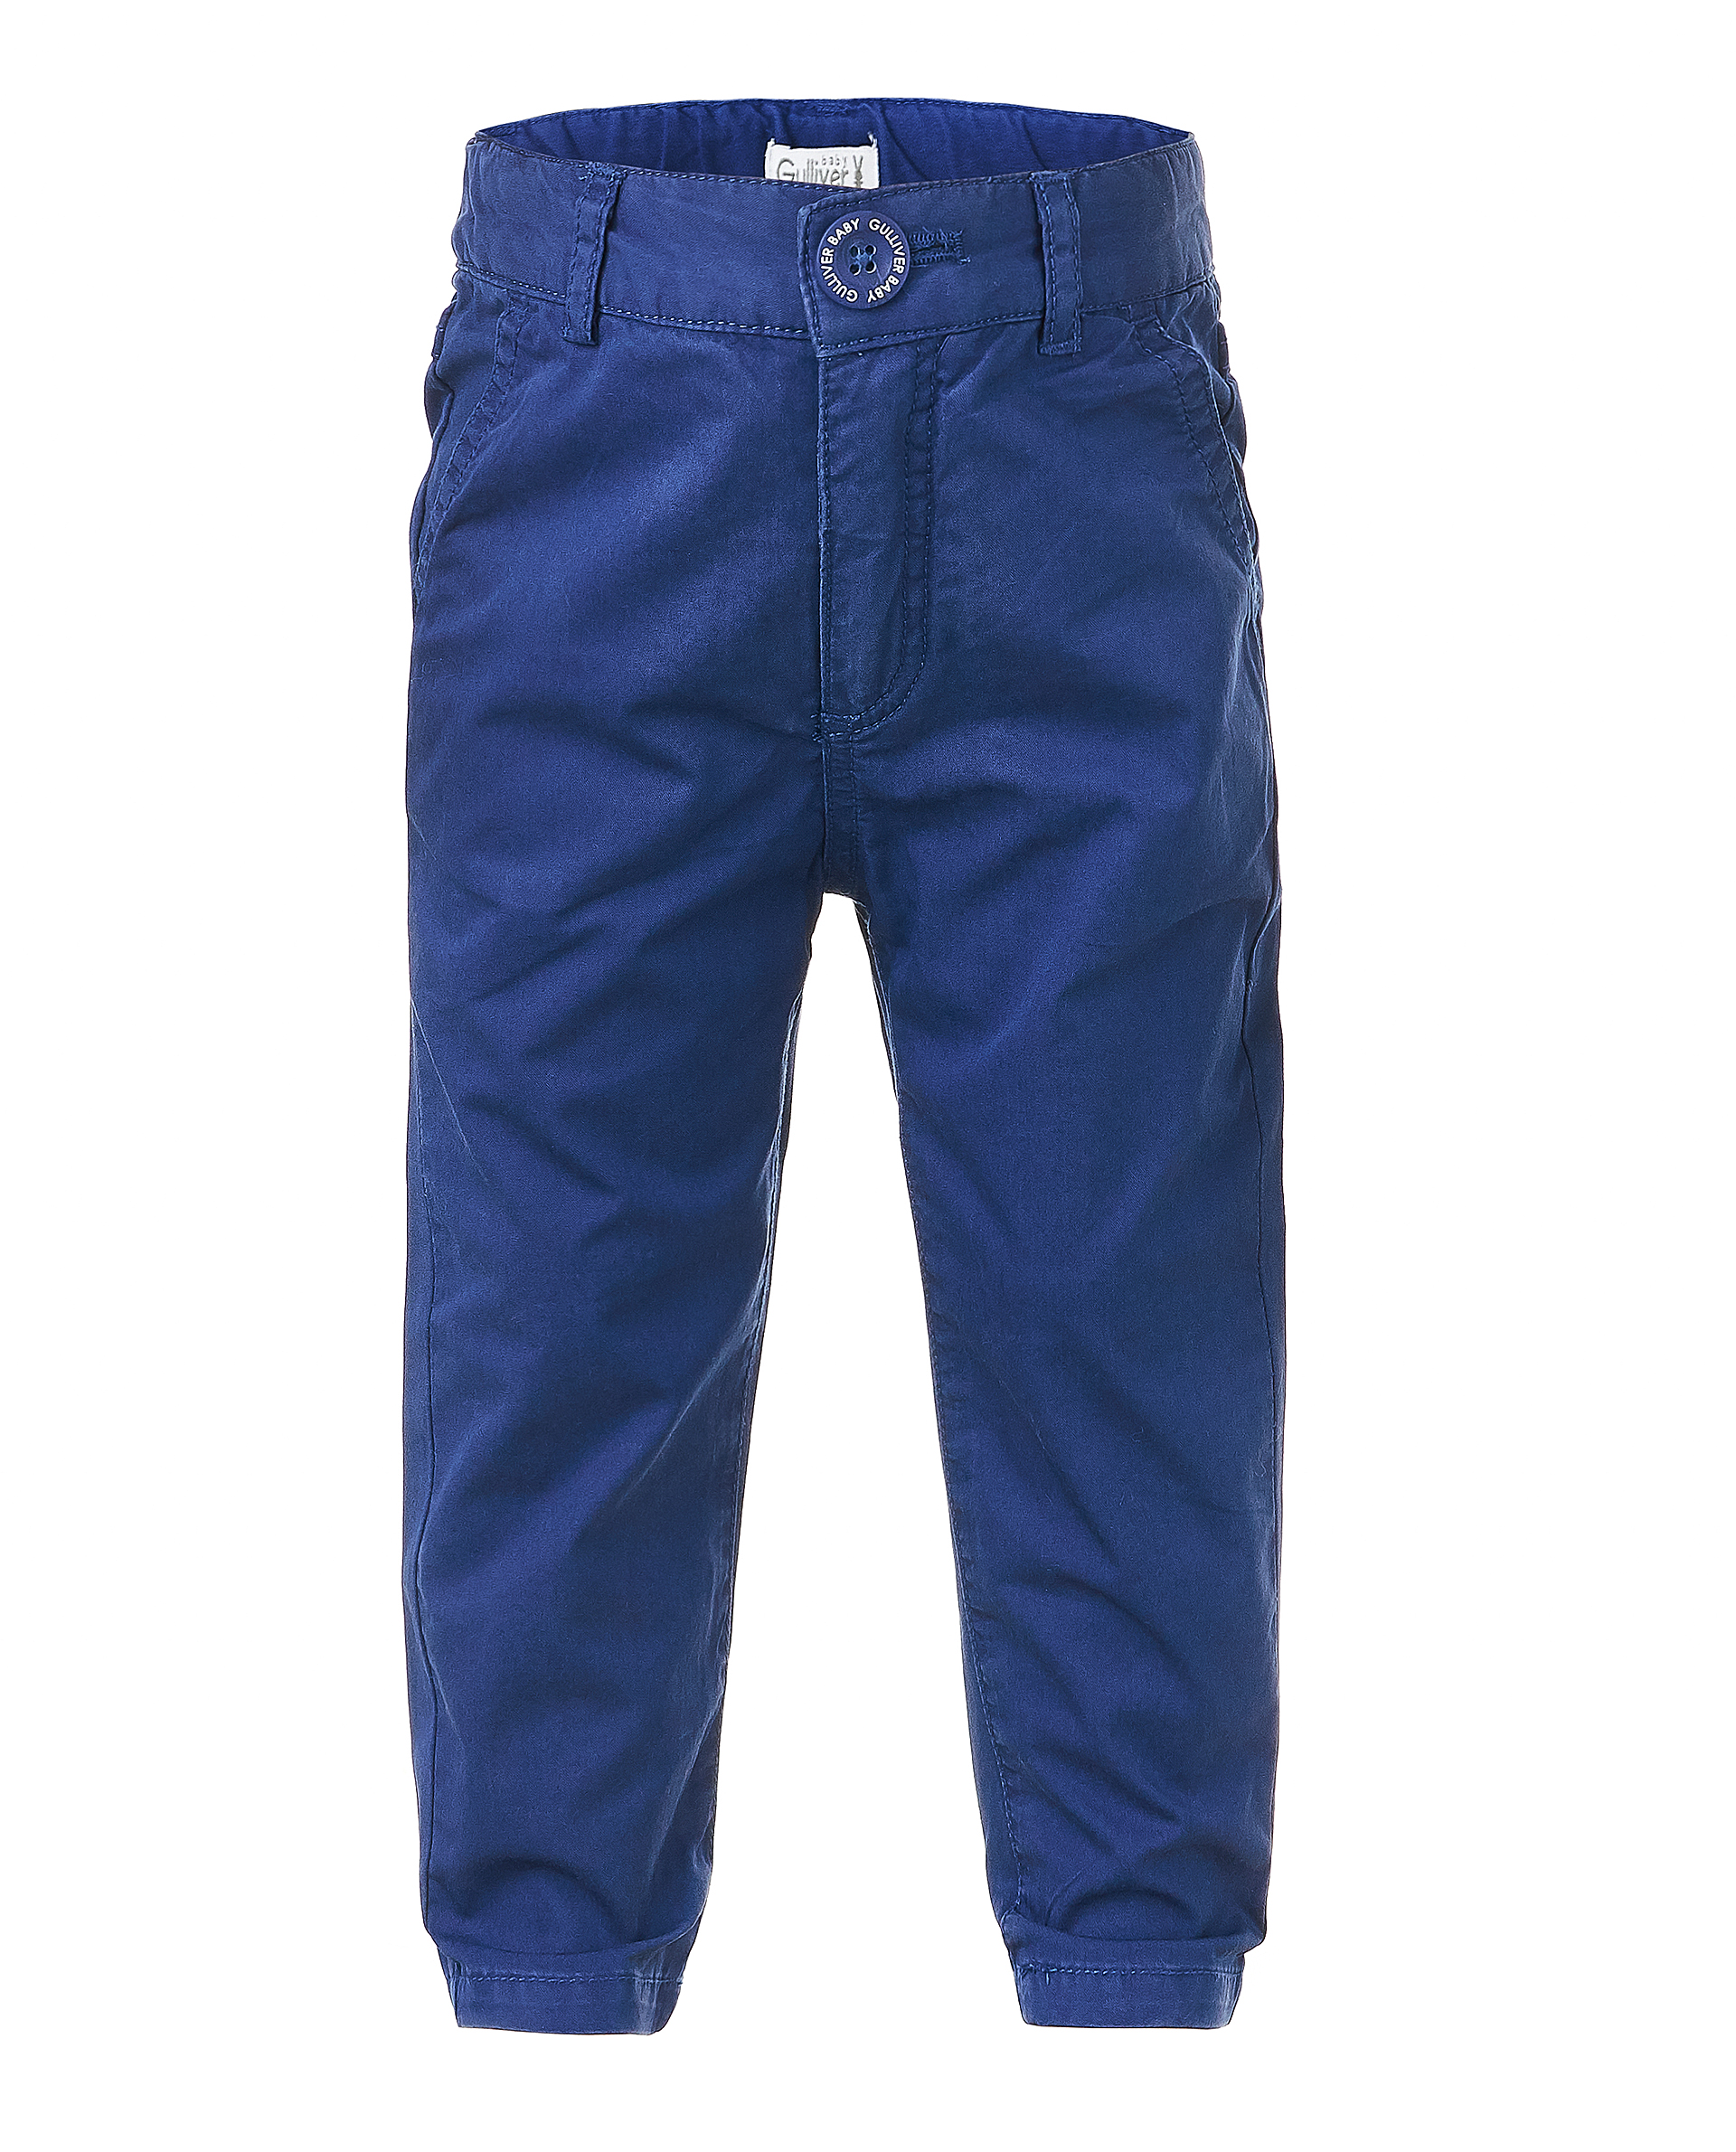 Купить 11933BBC6302, Синие брюки Gulliver, Gulliver Baby, синий, 74, Мужской, ВЕСНА/ЛЕТО 2019 (shop: GulliverMarket Gulliver Market)